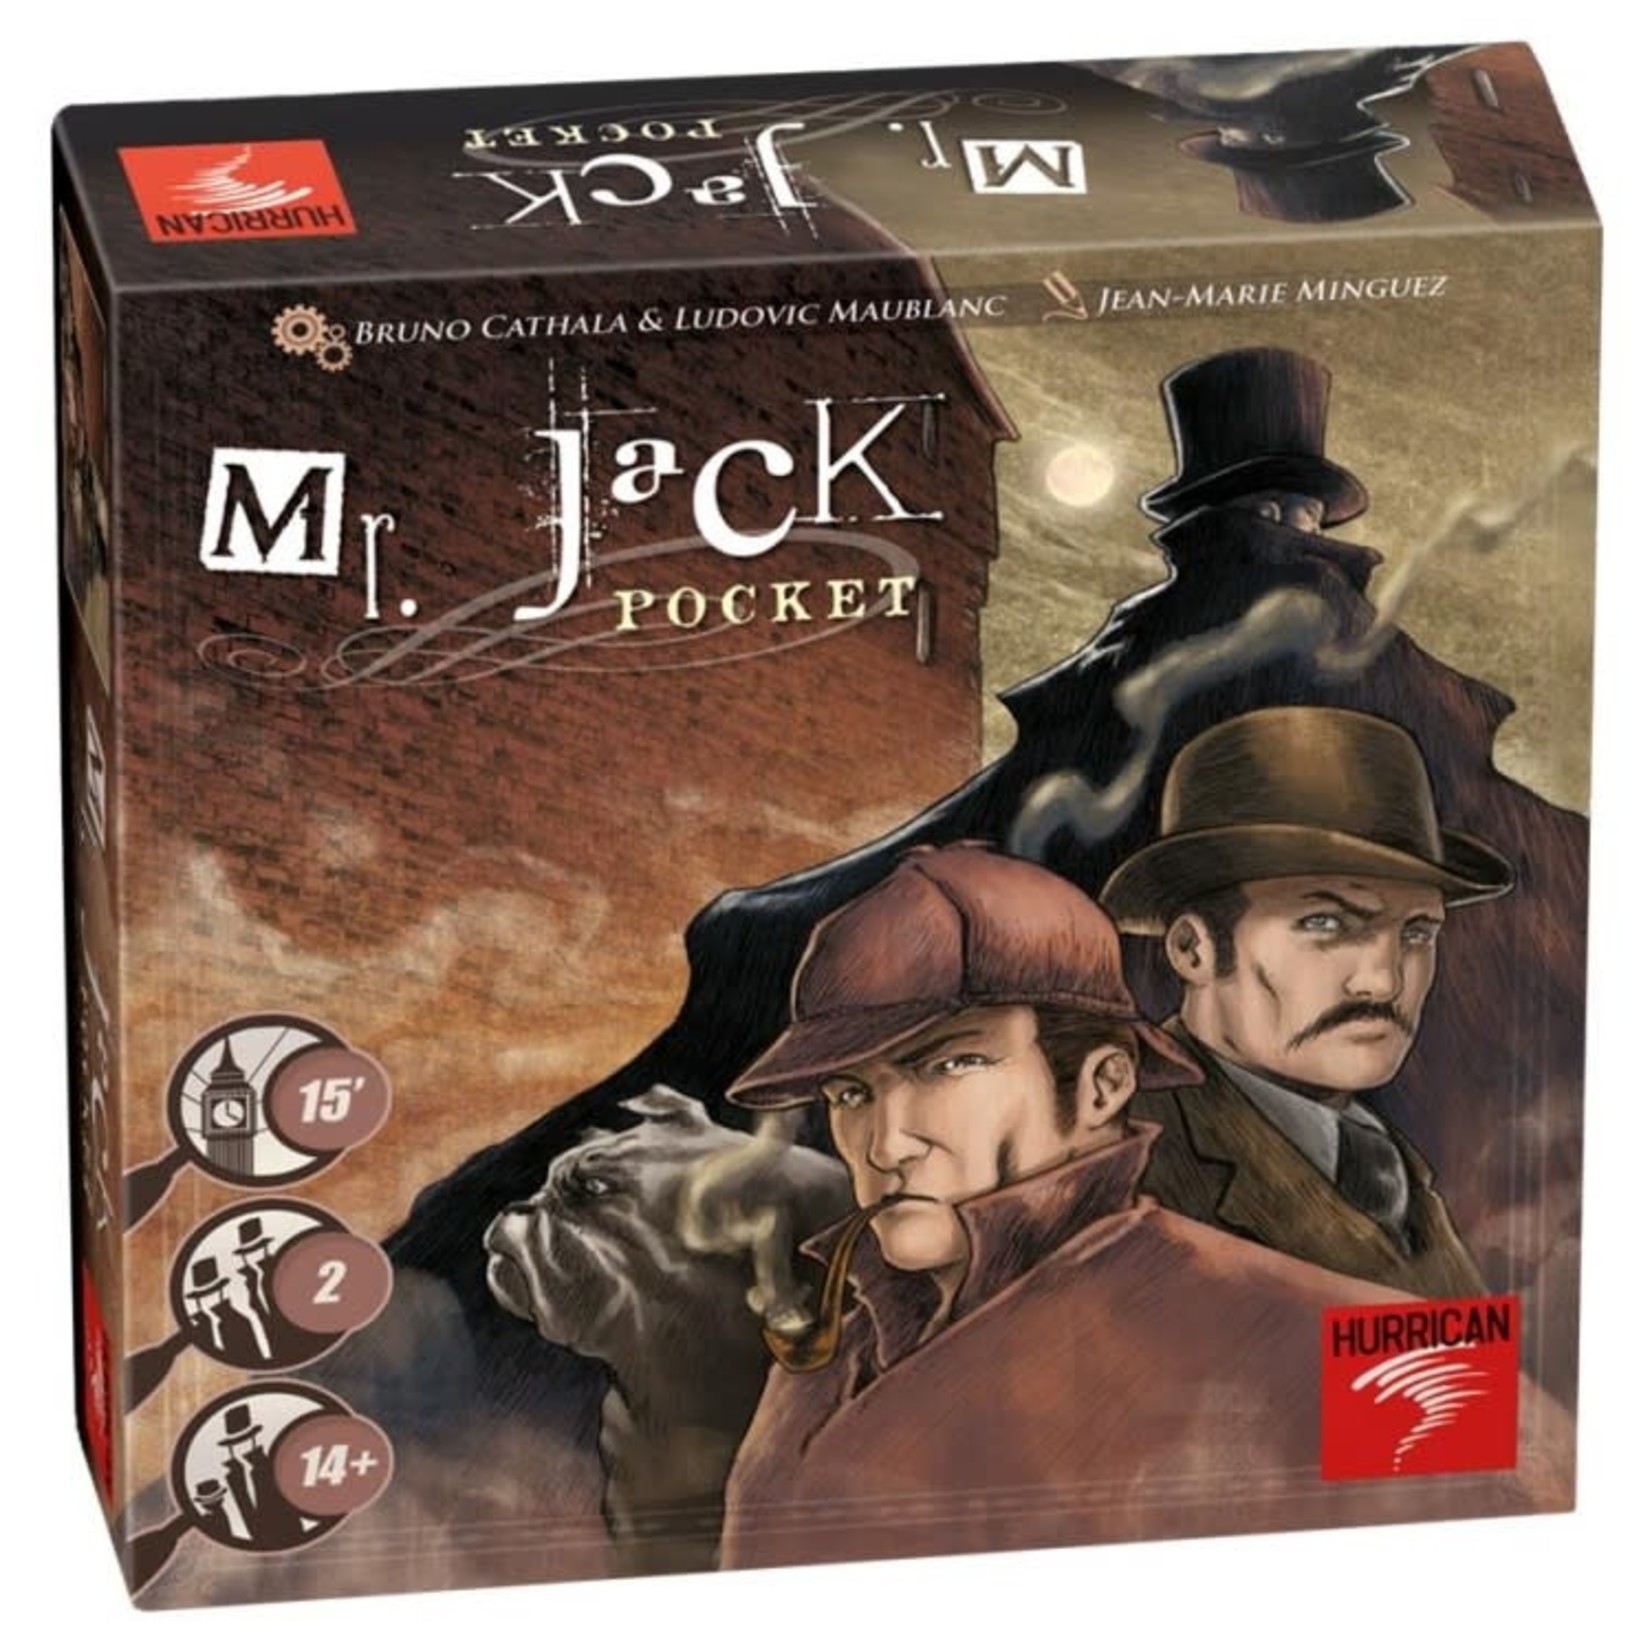 Hurrican Mr. Jack Pocket Edition